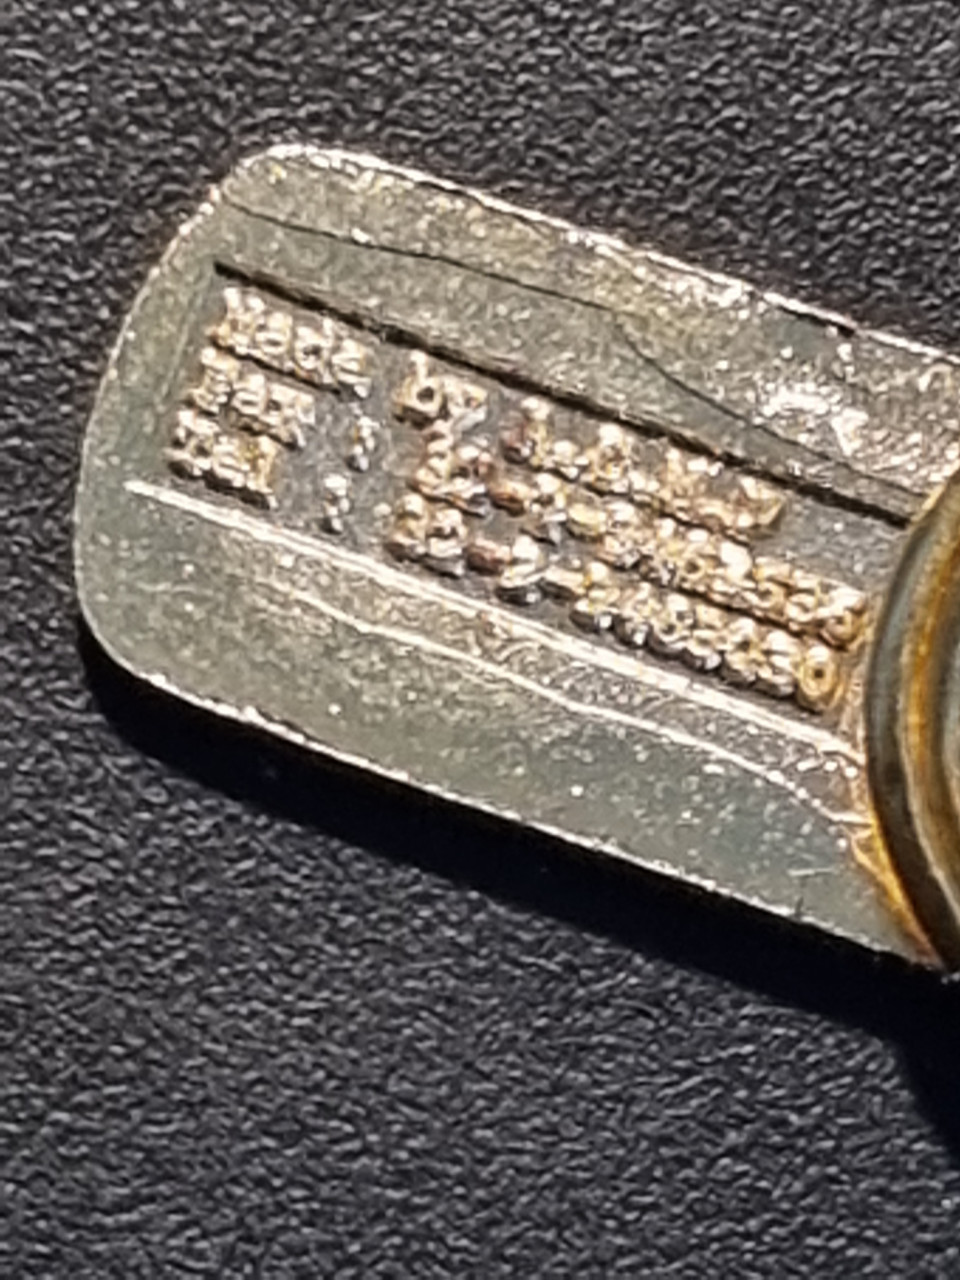 Vintage Pins 4 stuks. Bieden per stuk, aantal of alles in 1x